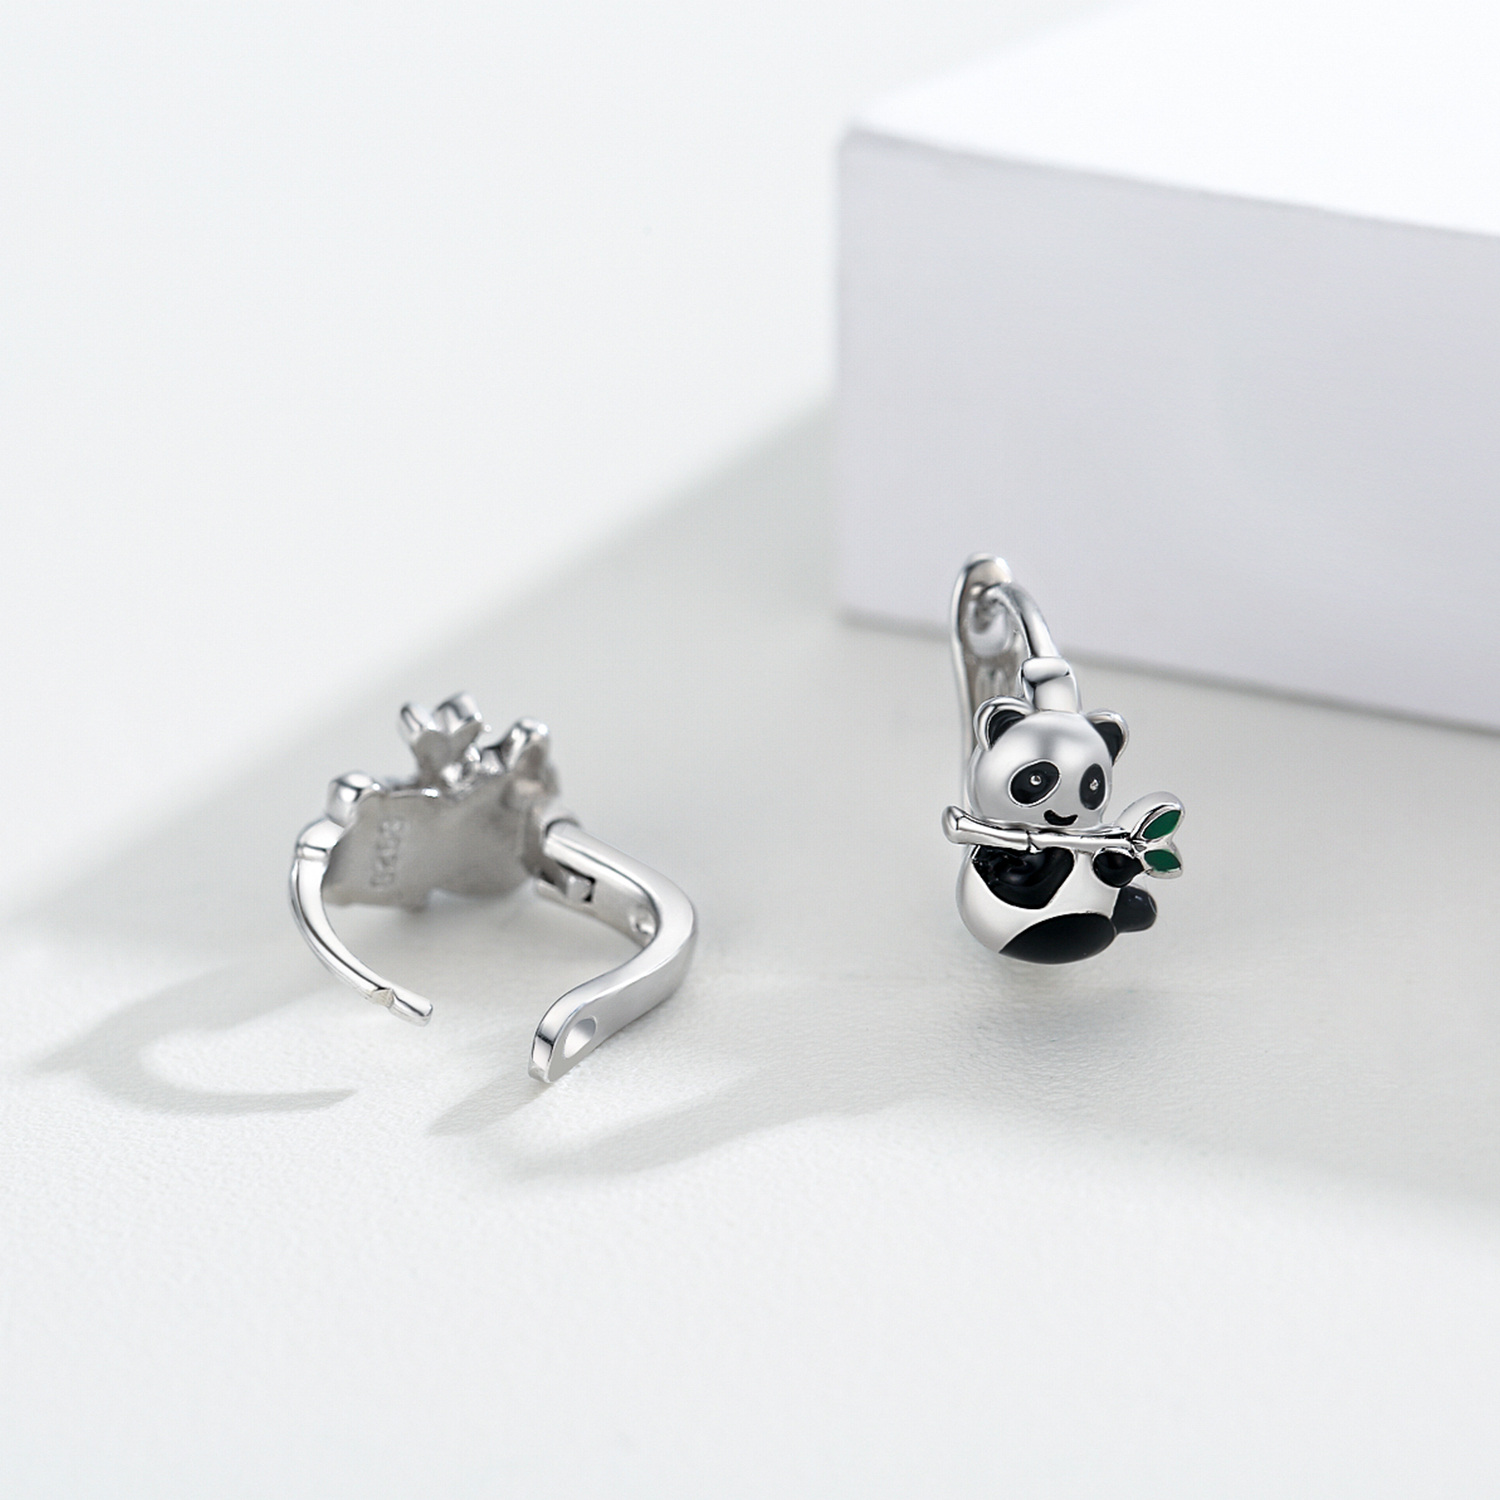 Hypoallergenic Panda/Owl Hoop Earrings for Women Girls Sterling Silver Small Animal Huggie Hoop Earrings for Sensitive Ears Panda Jewelry Gifts.